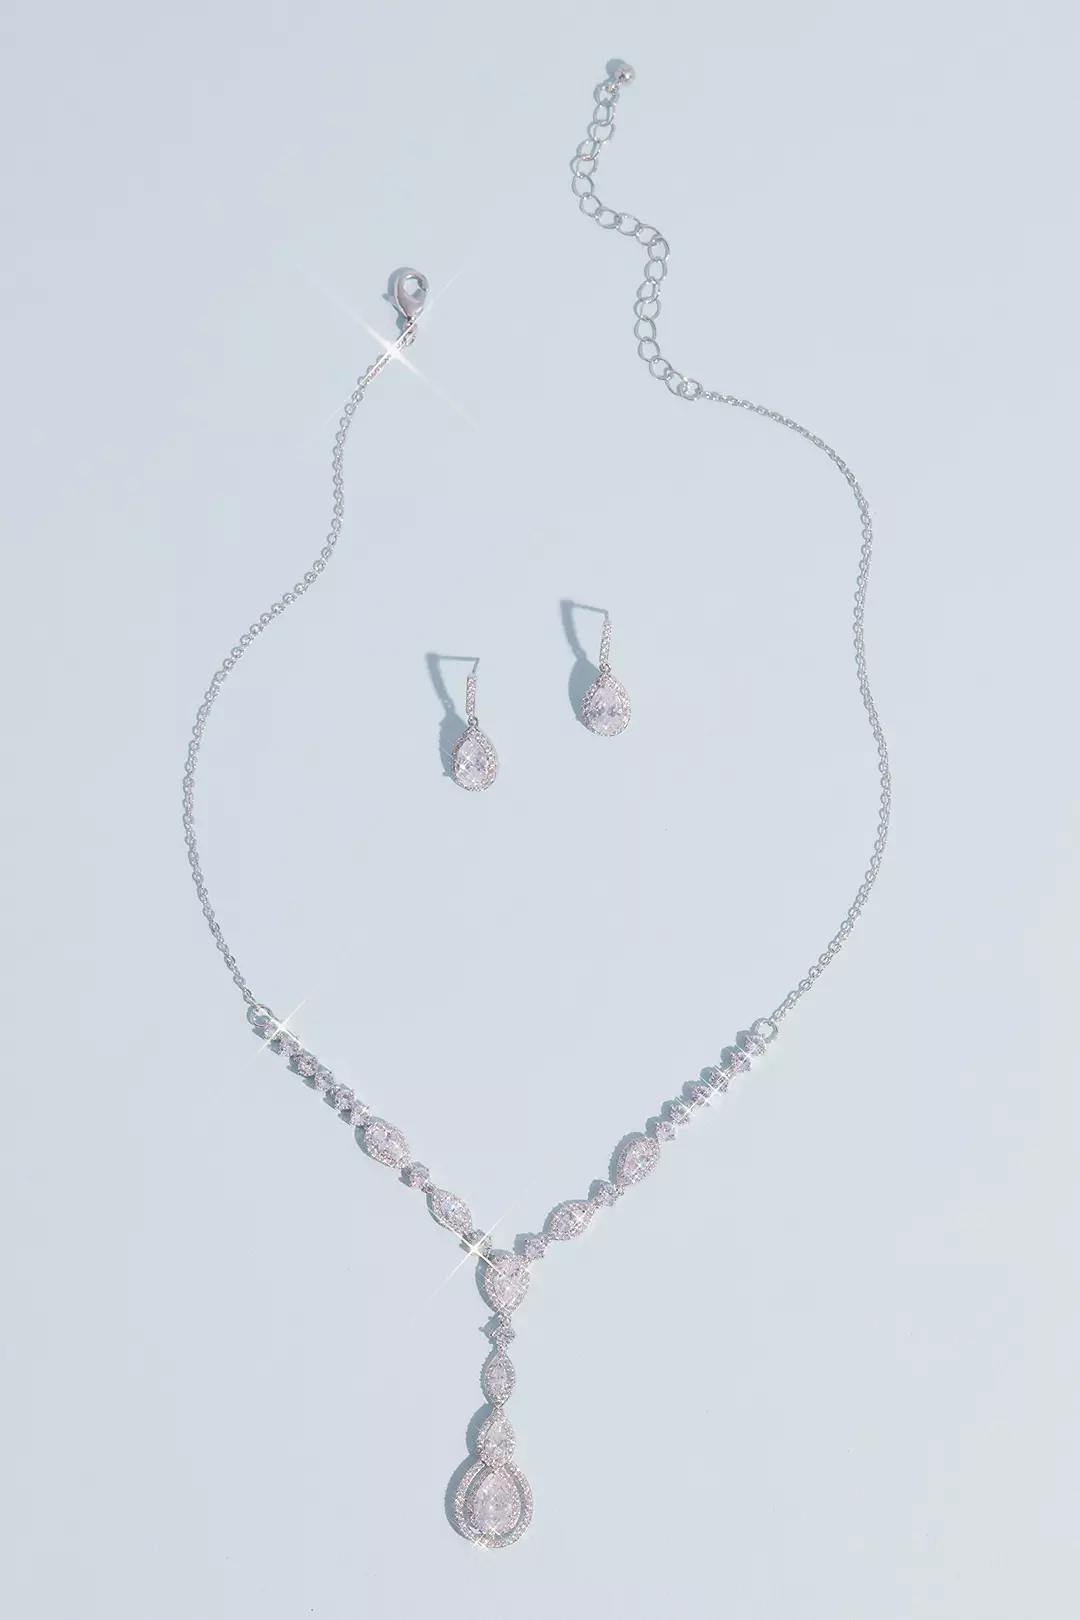 Teardrop Cut Pendant Necklace and Earring Set Image